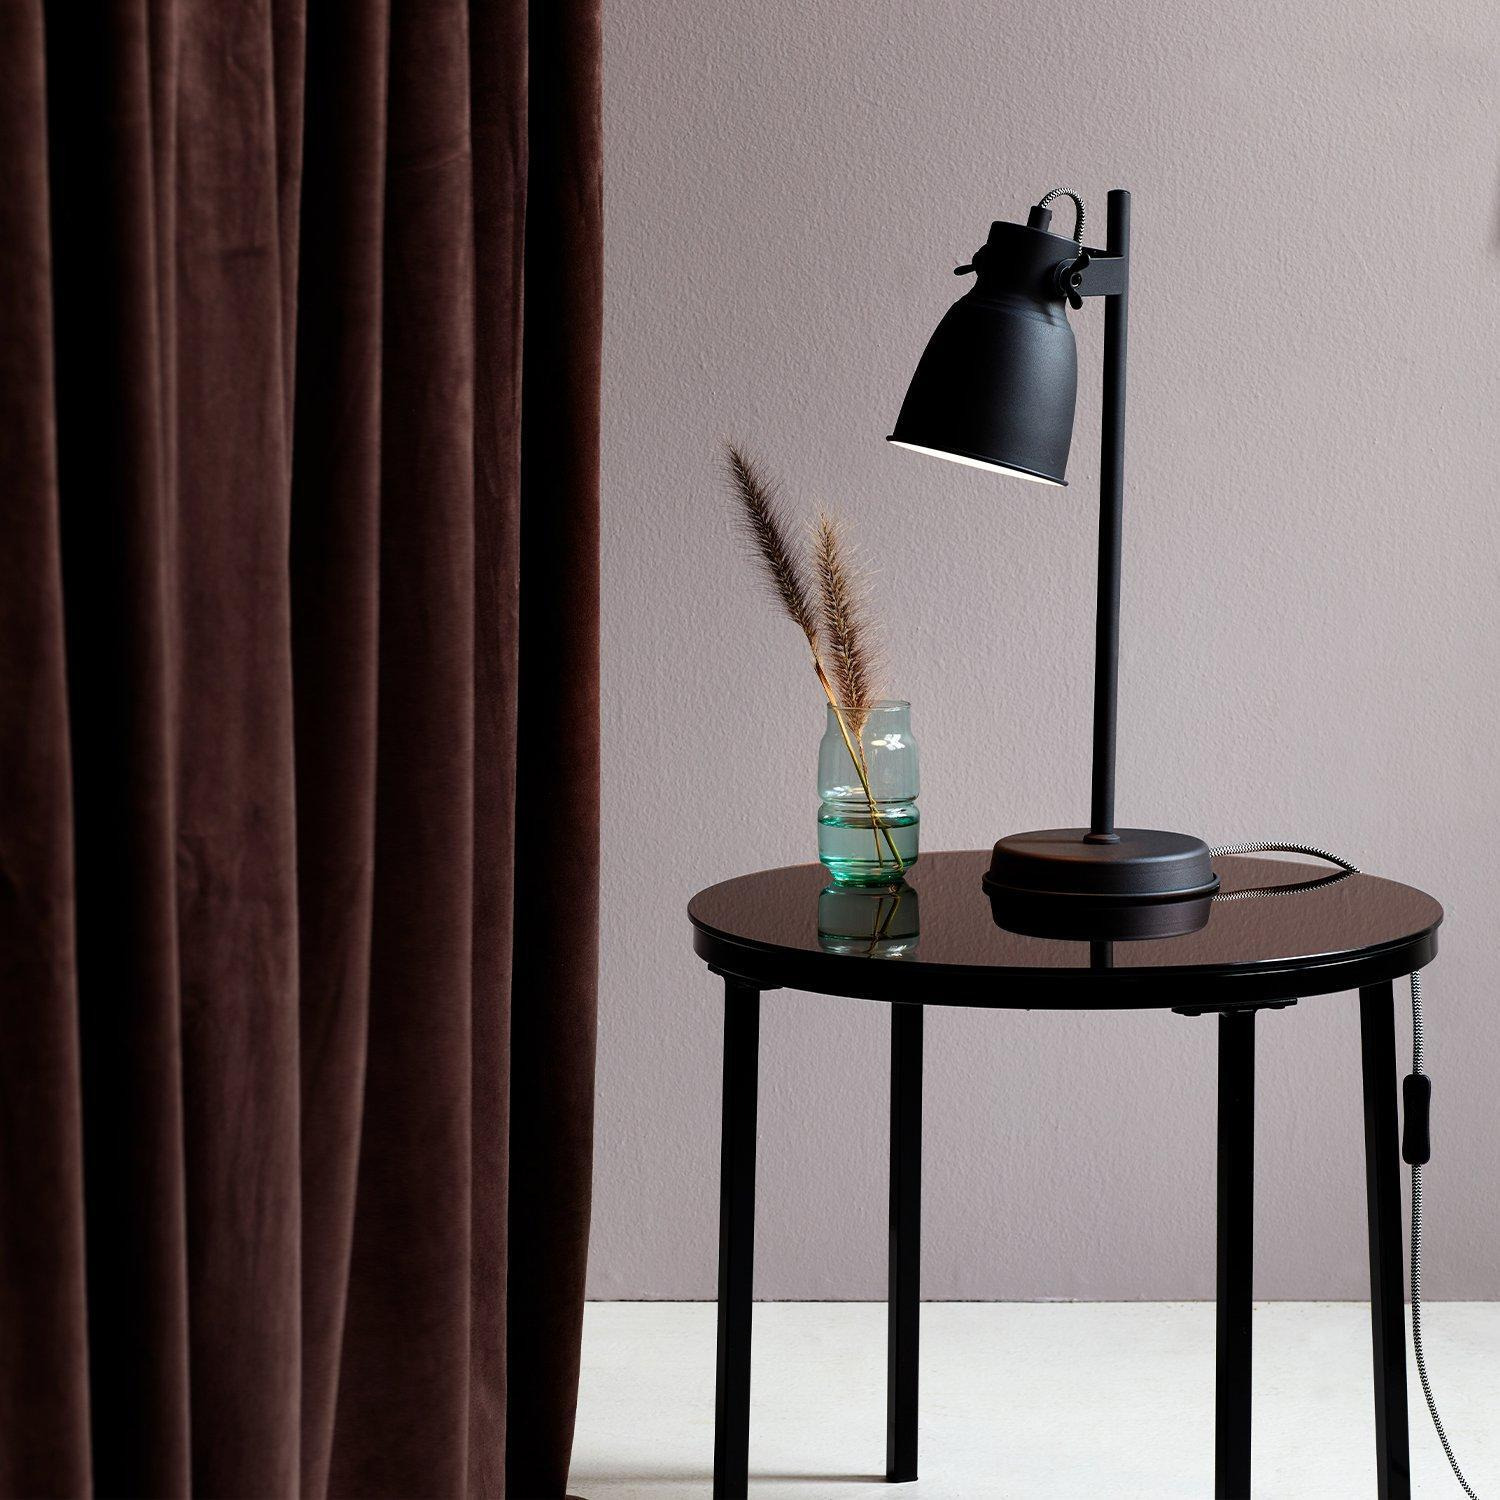 Nordlux Adrian Indoor Living Dining Metal Table Lamp in Anthracite (Diam) 12.5cm - image 1